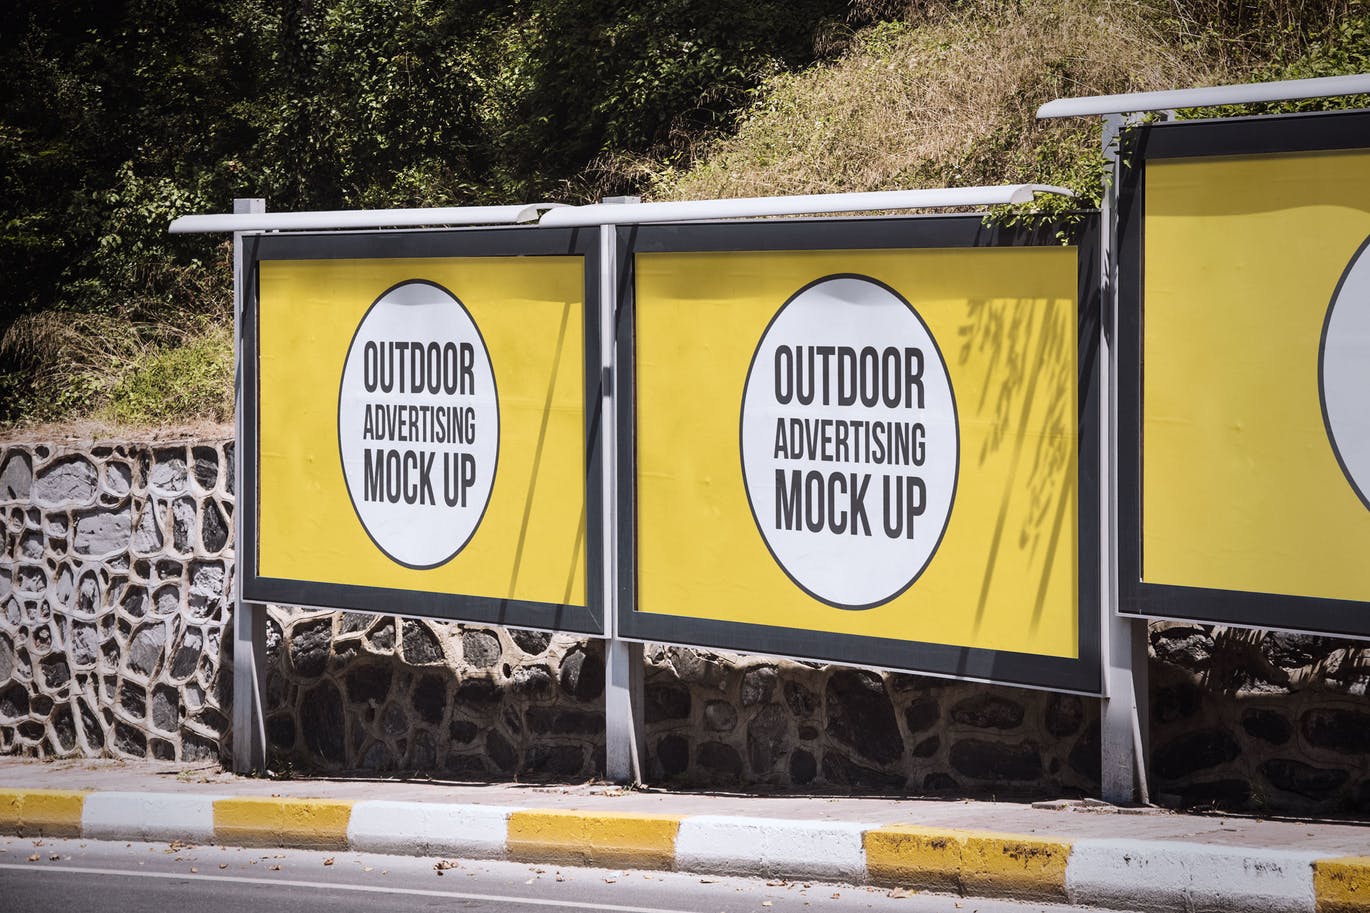 户外公路广告牌广告设计预览样机#4 Outdoor Billboard Advertising Mockup Template #4插图